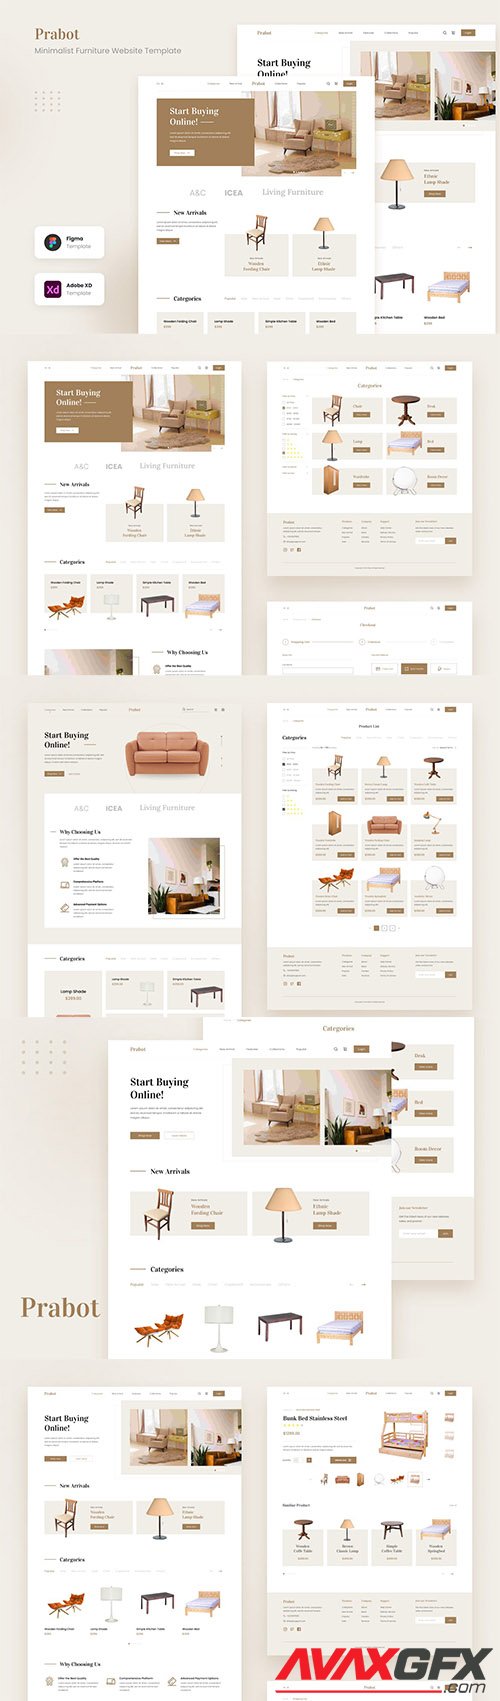 Prabot - Minimalist Furniture Website UI Template